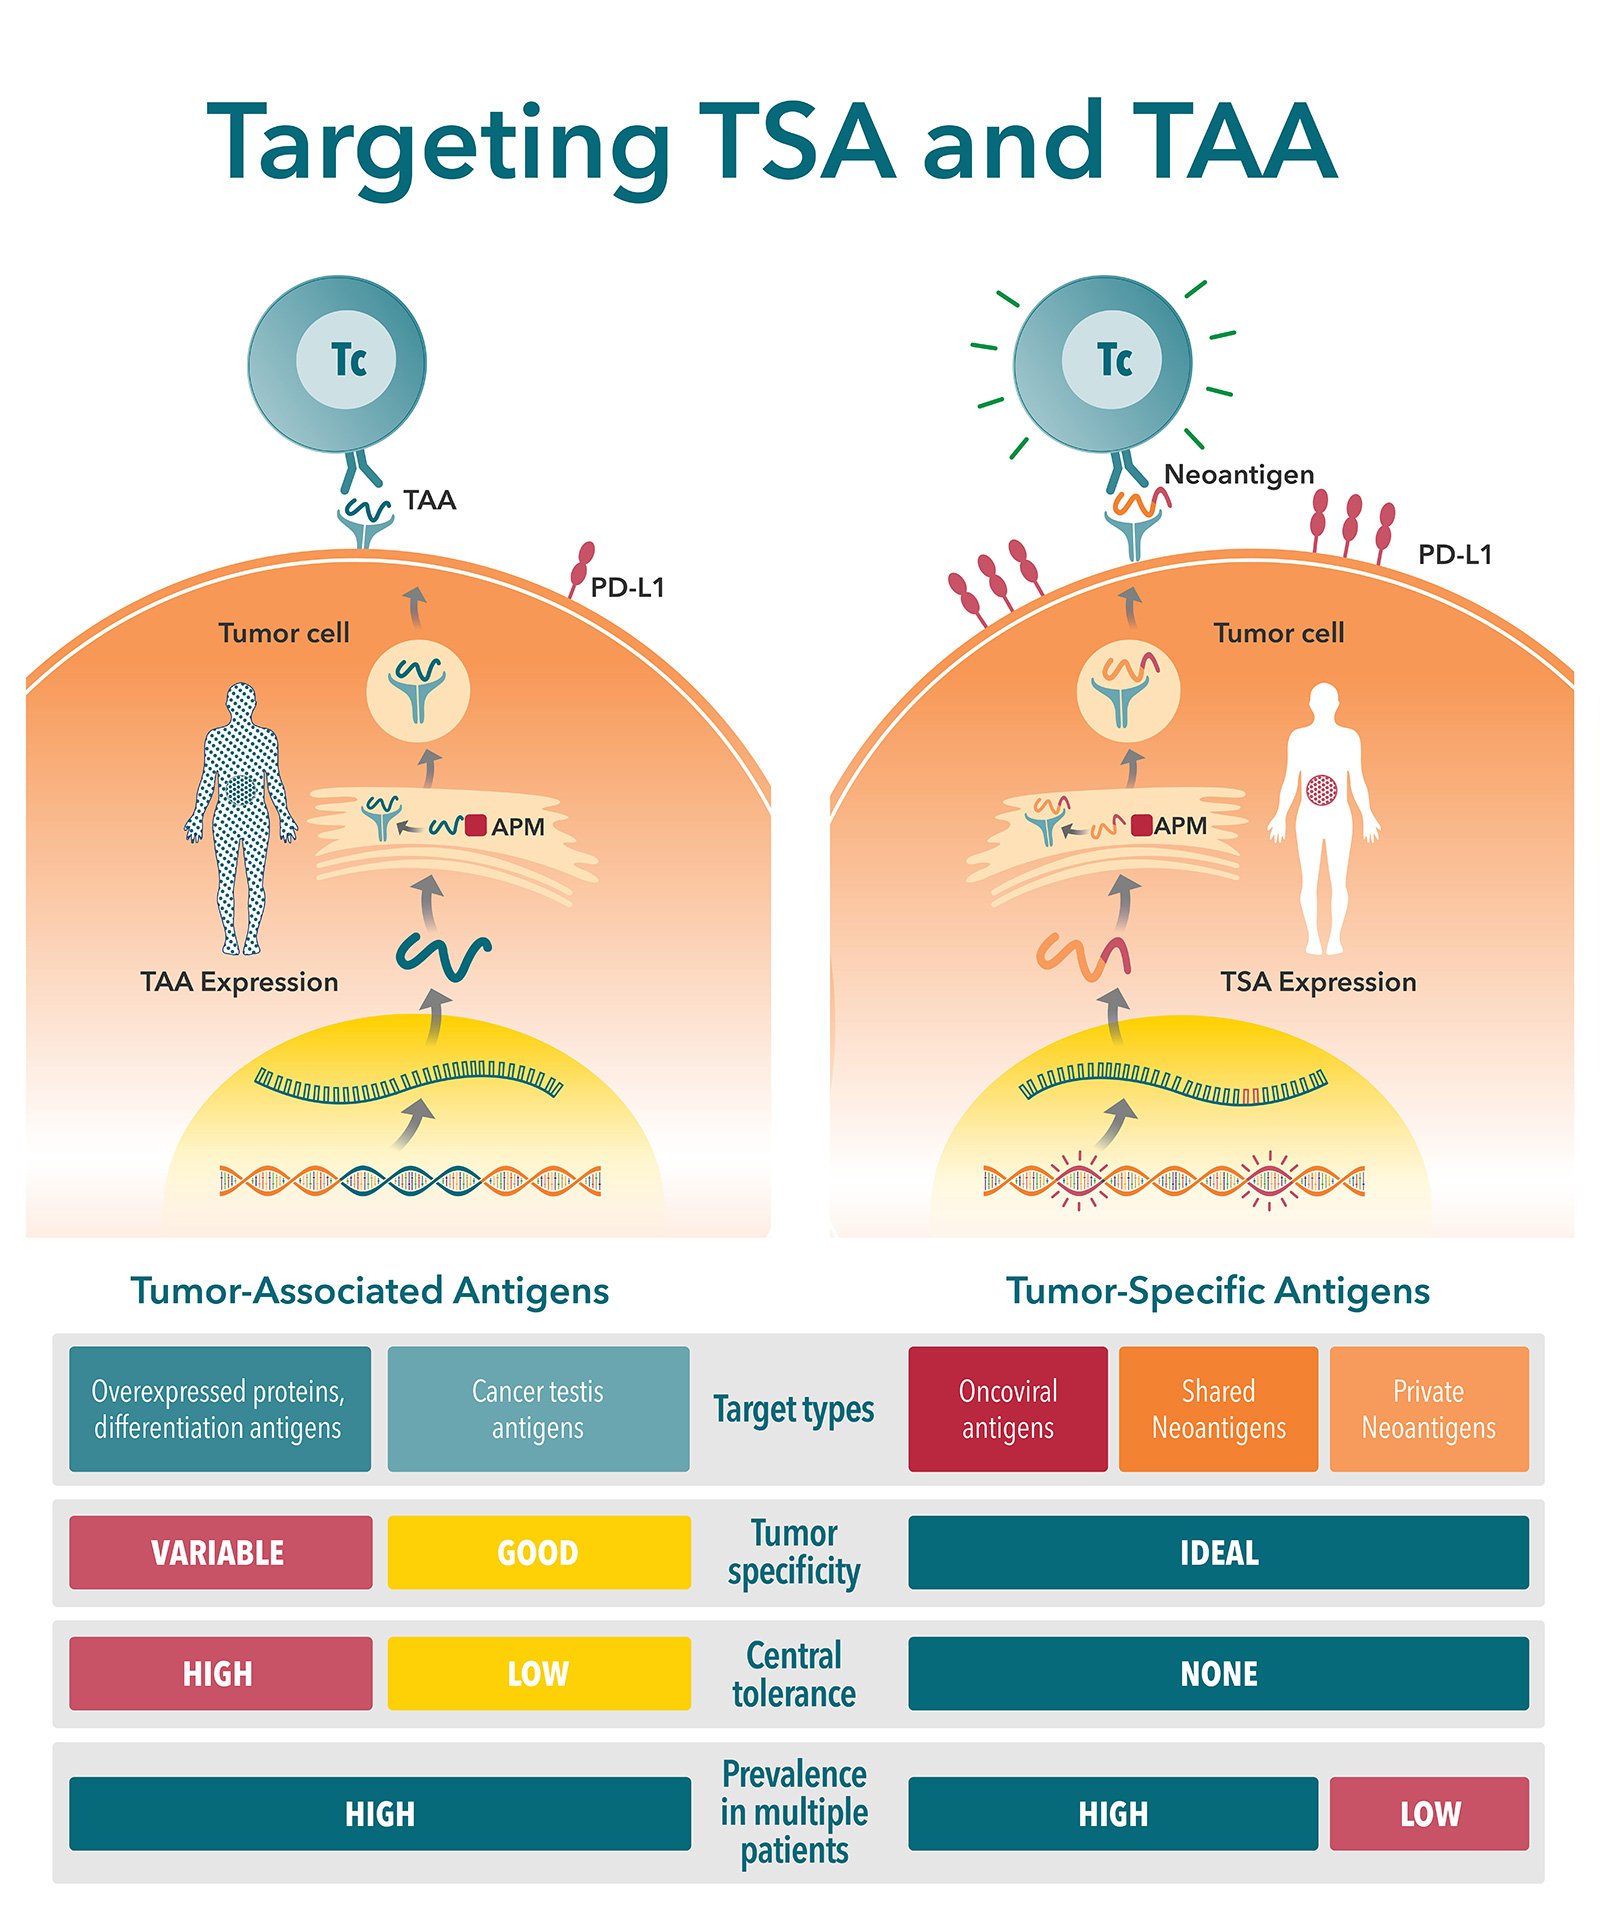 Targeting Tumor-Associated Antigens and Tumor-Specific Antigens